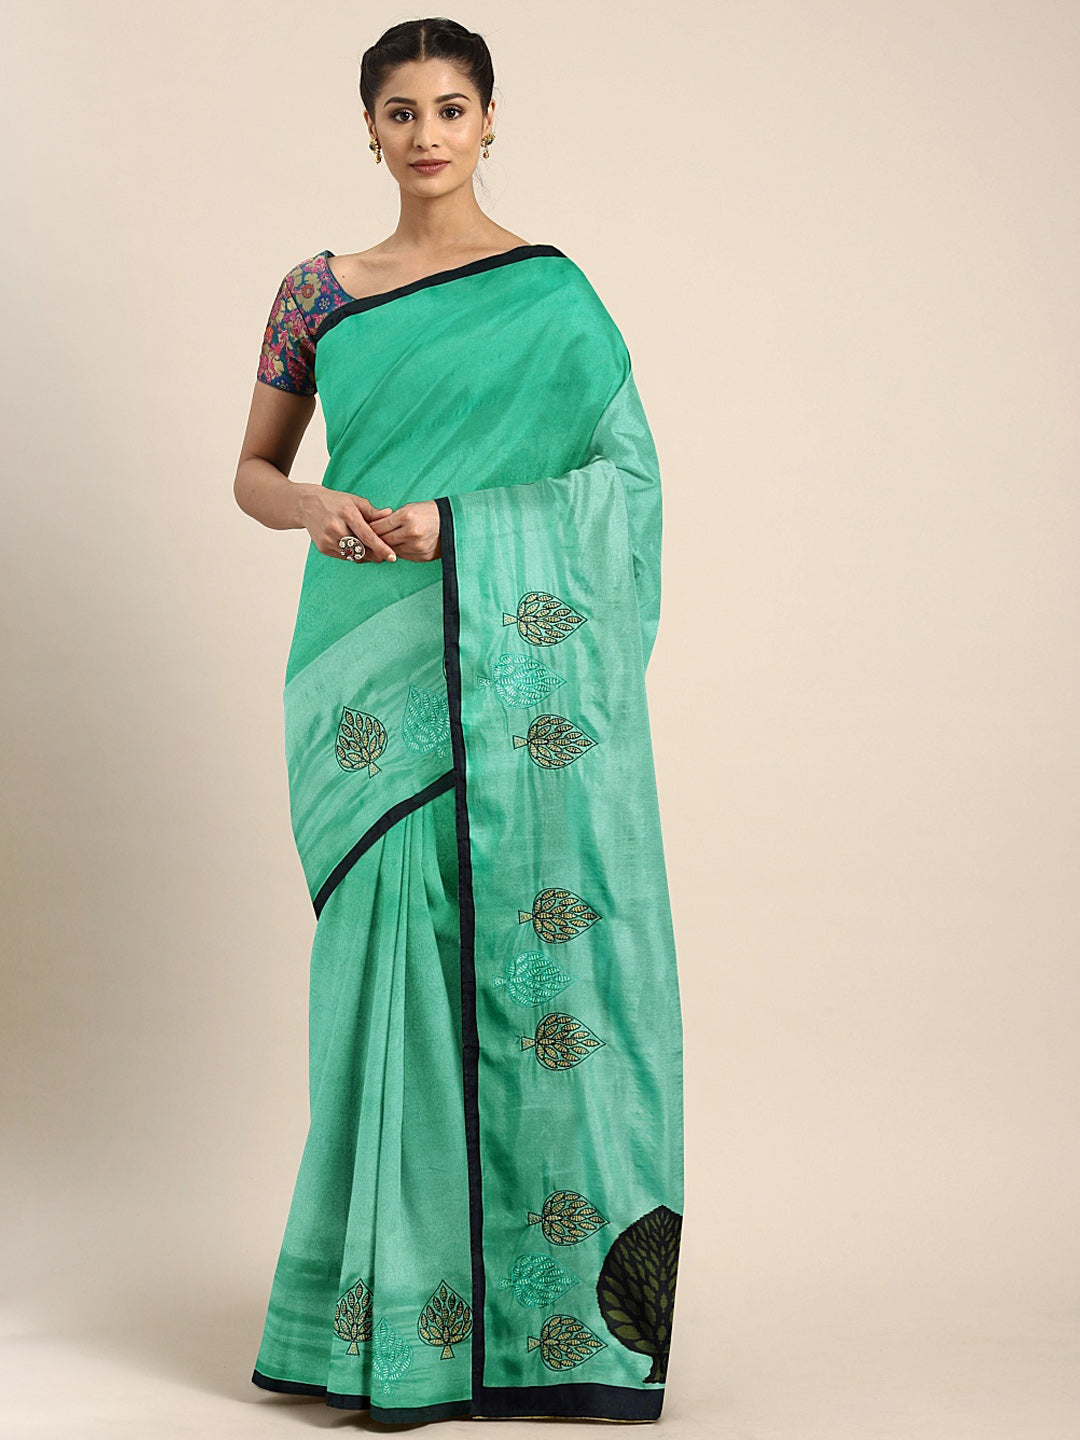 Neeru's Sea Green Printed Saree With Blouse